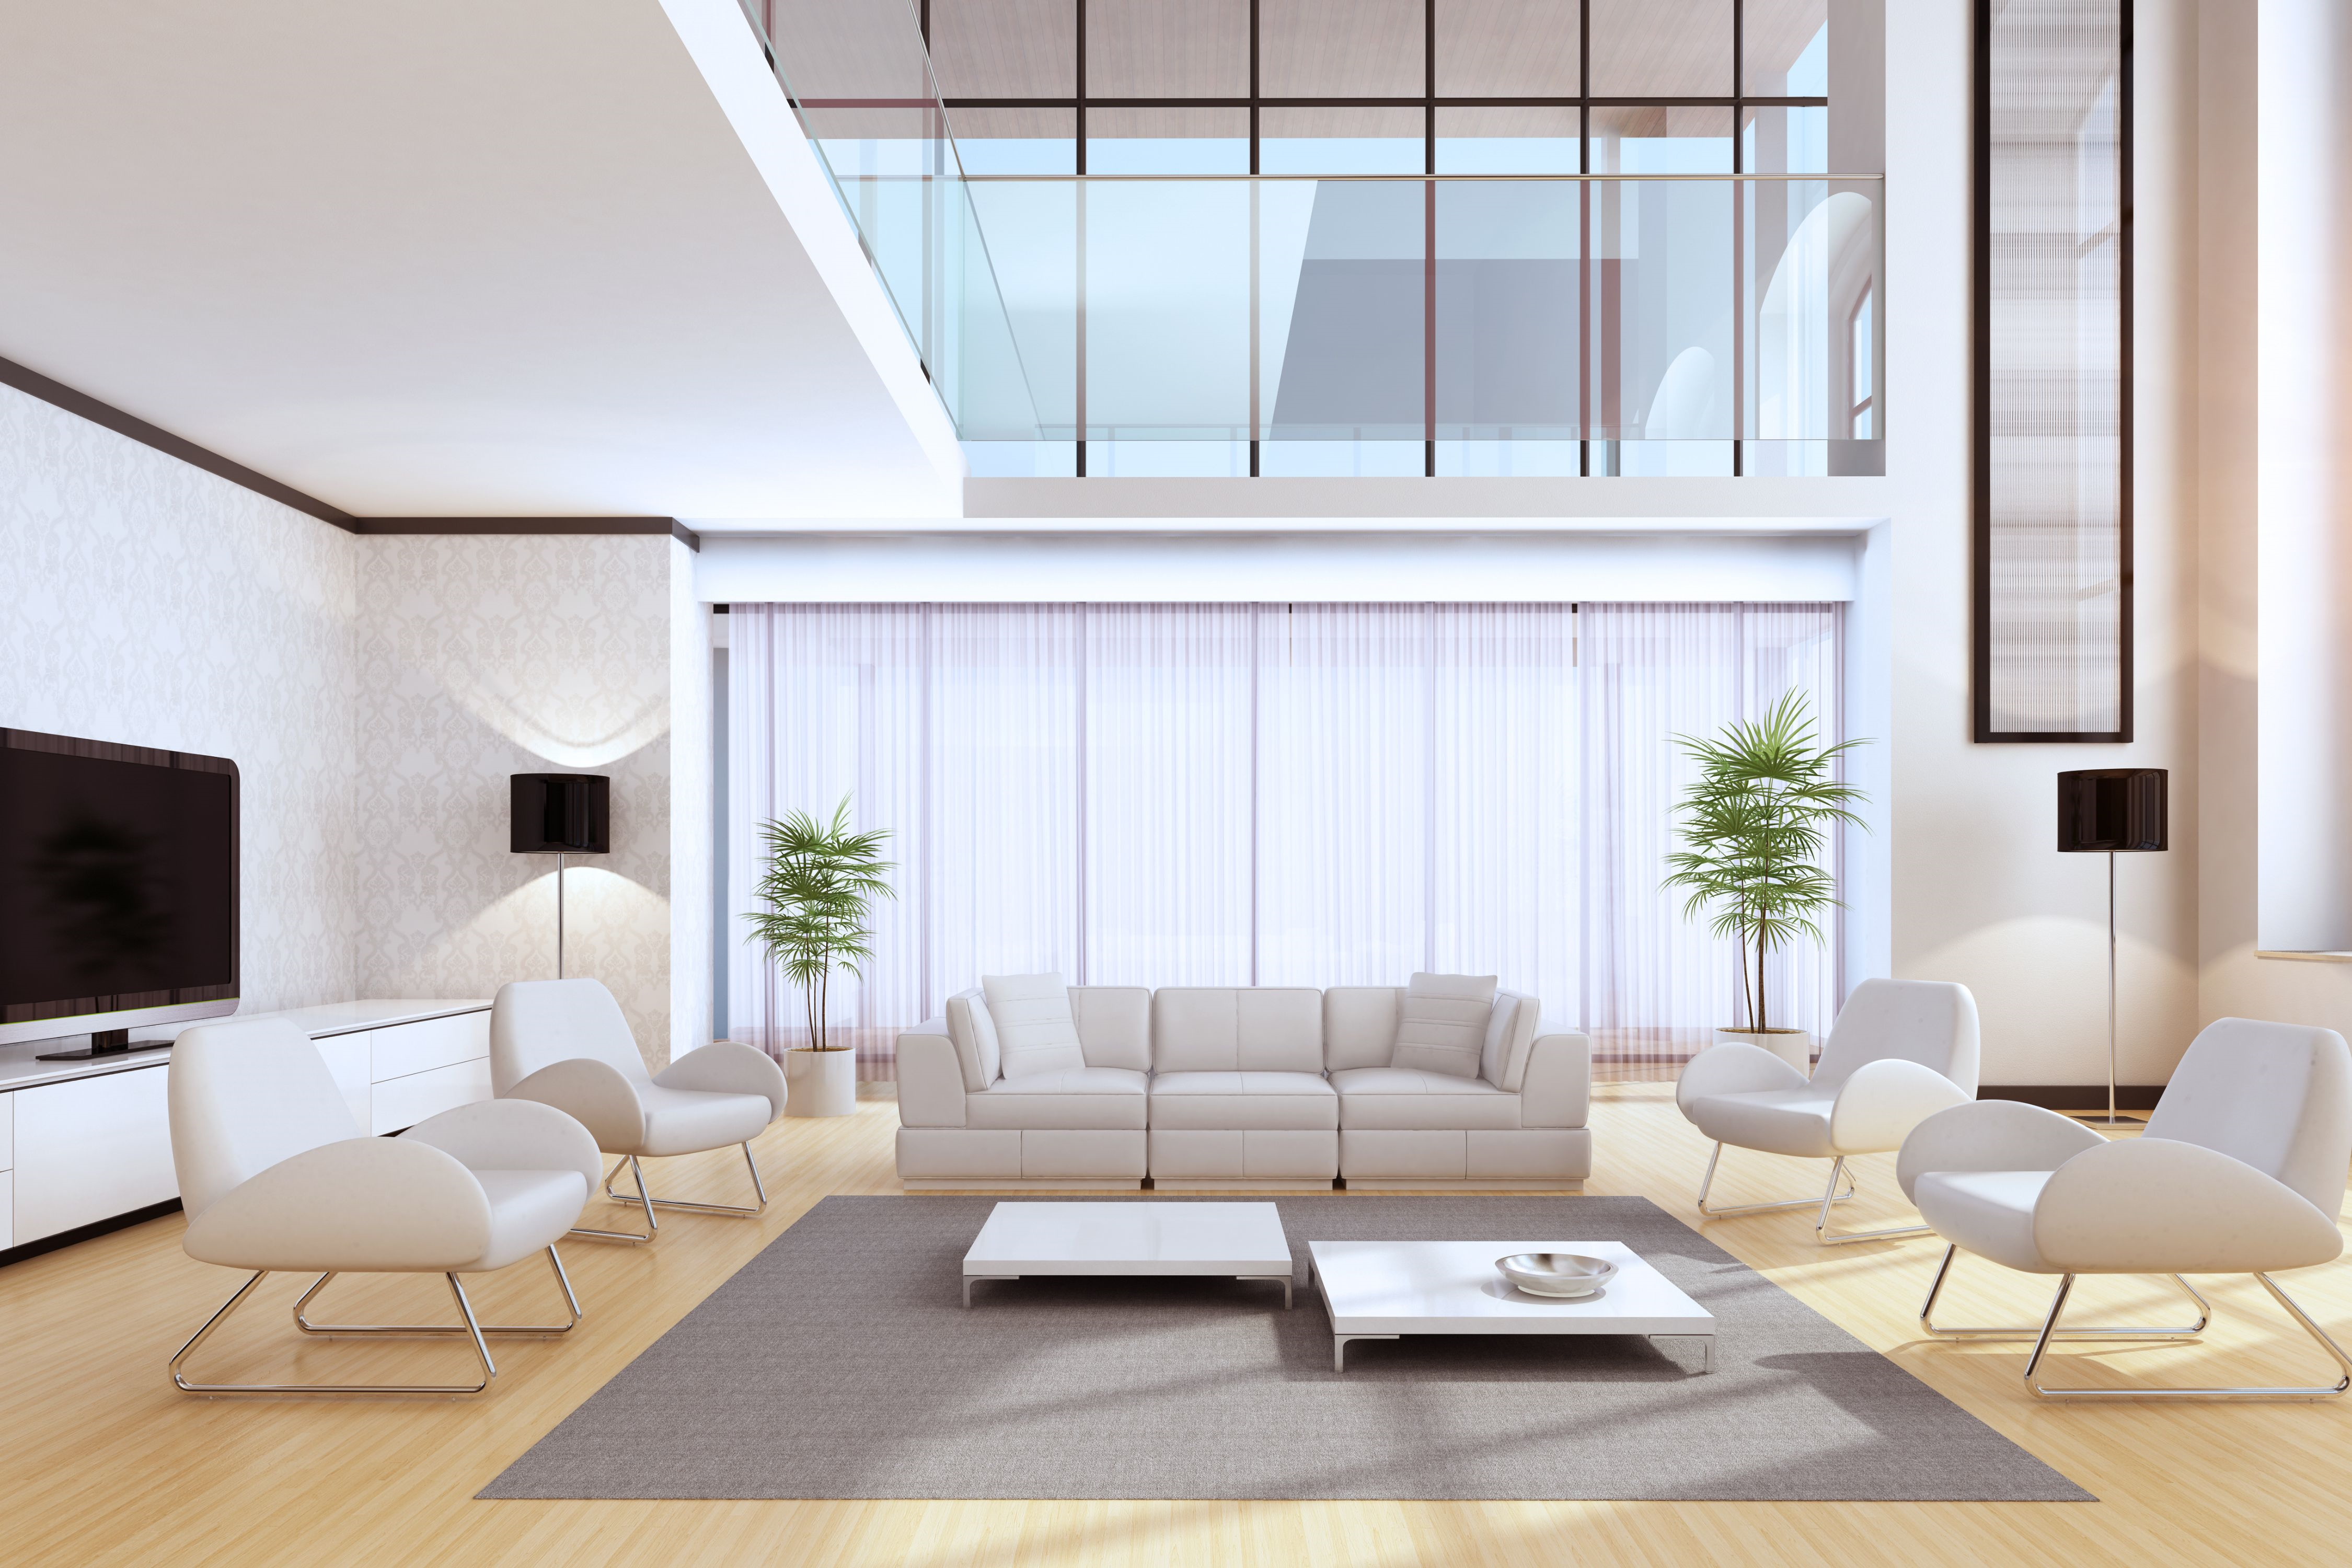 Luxury villa living room interior design 